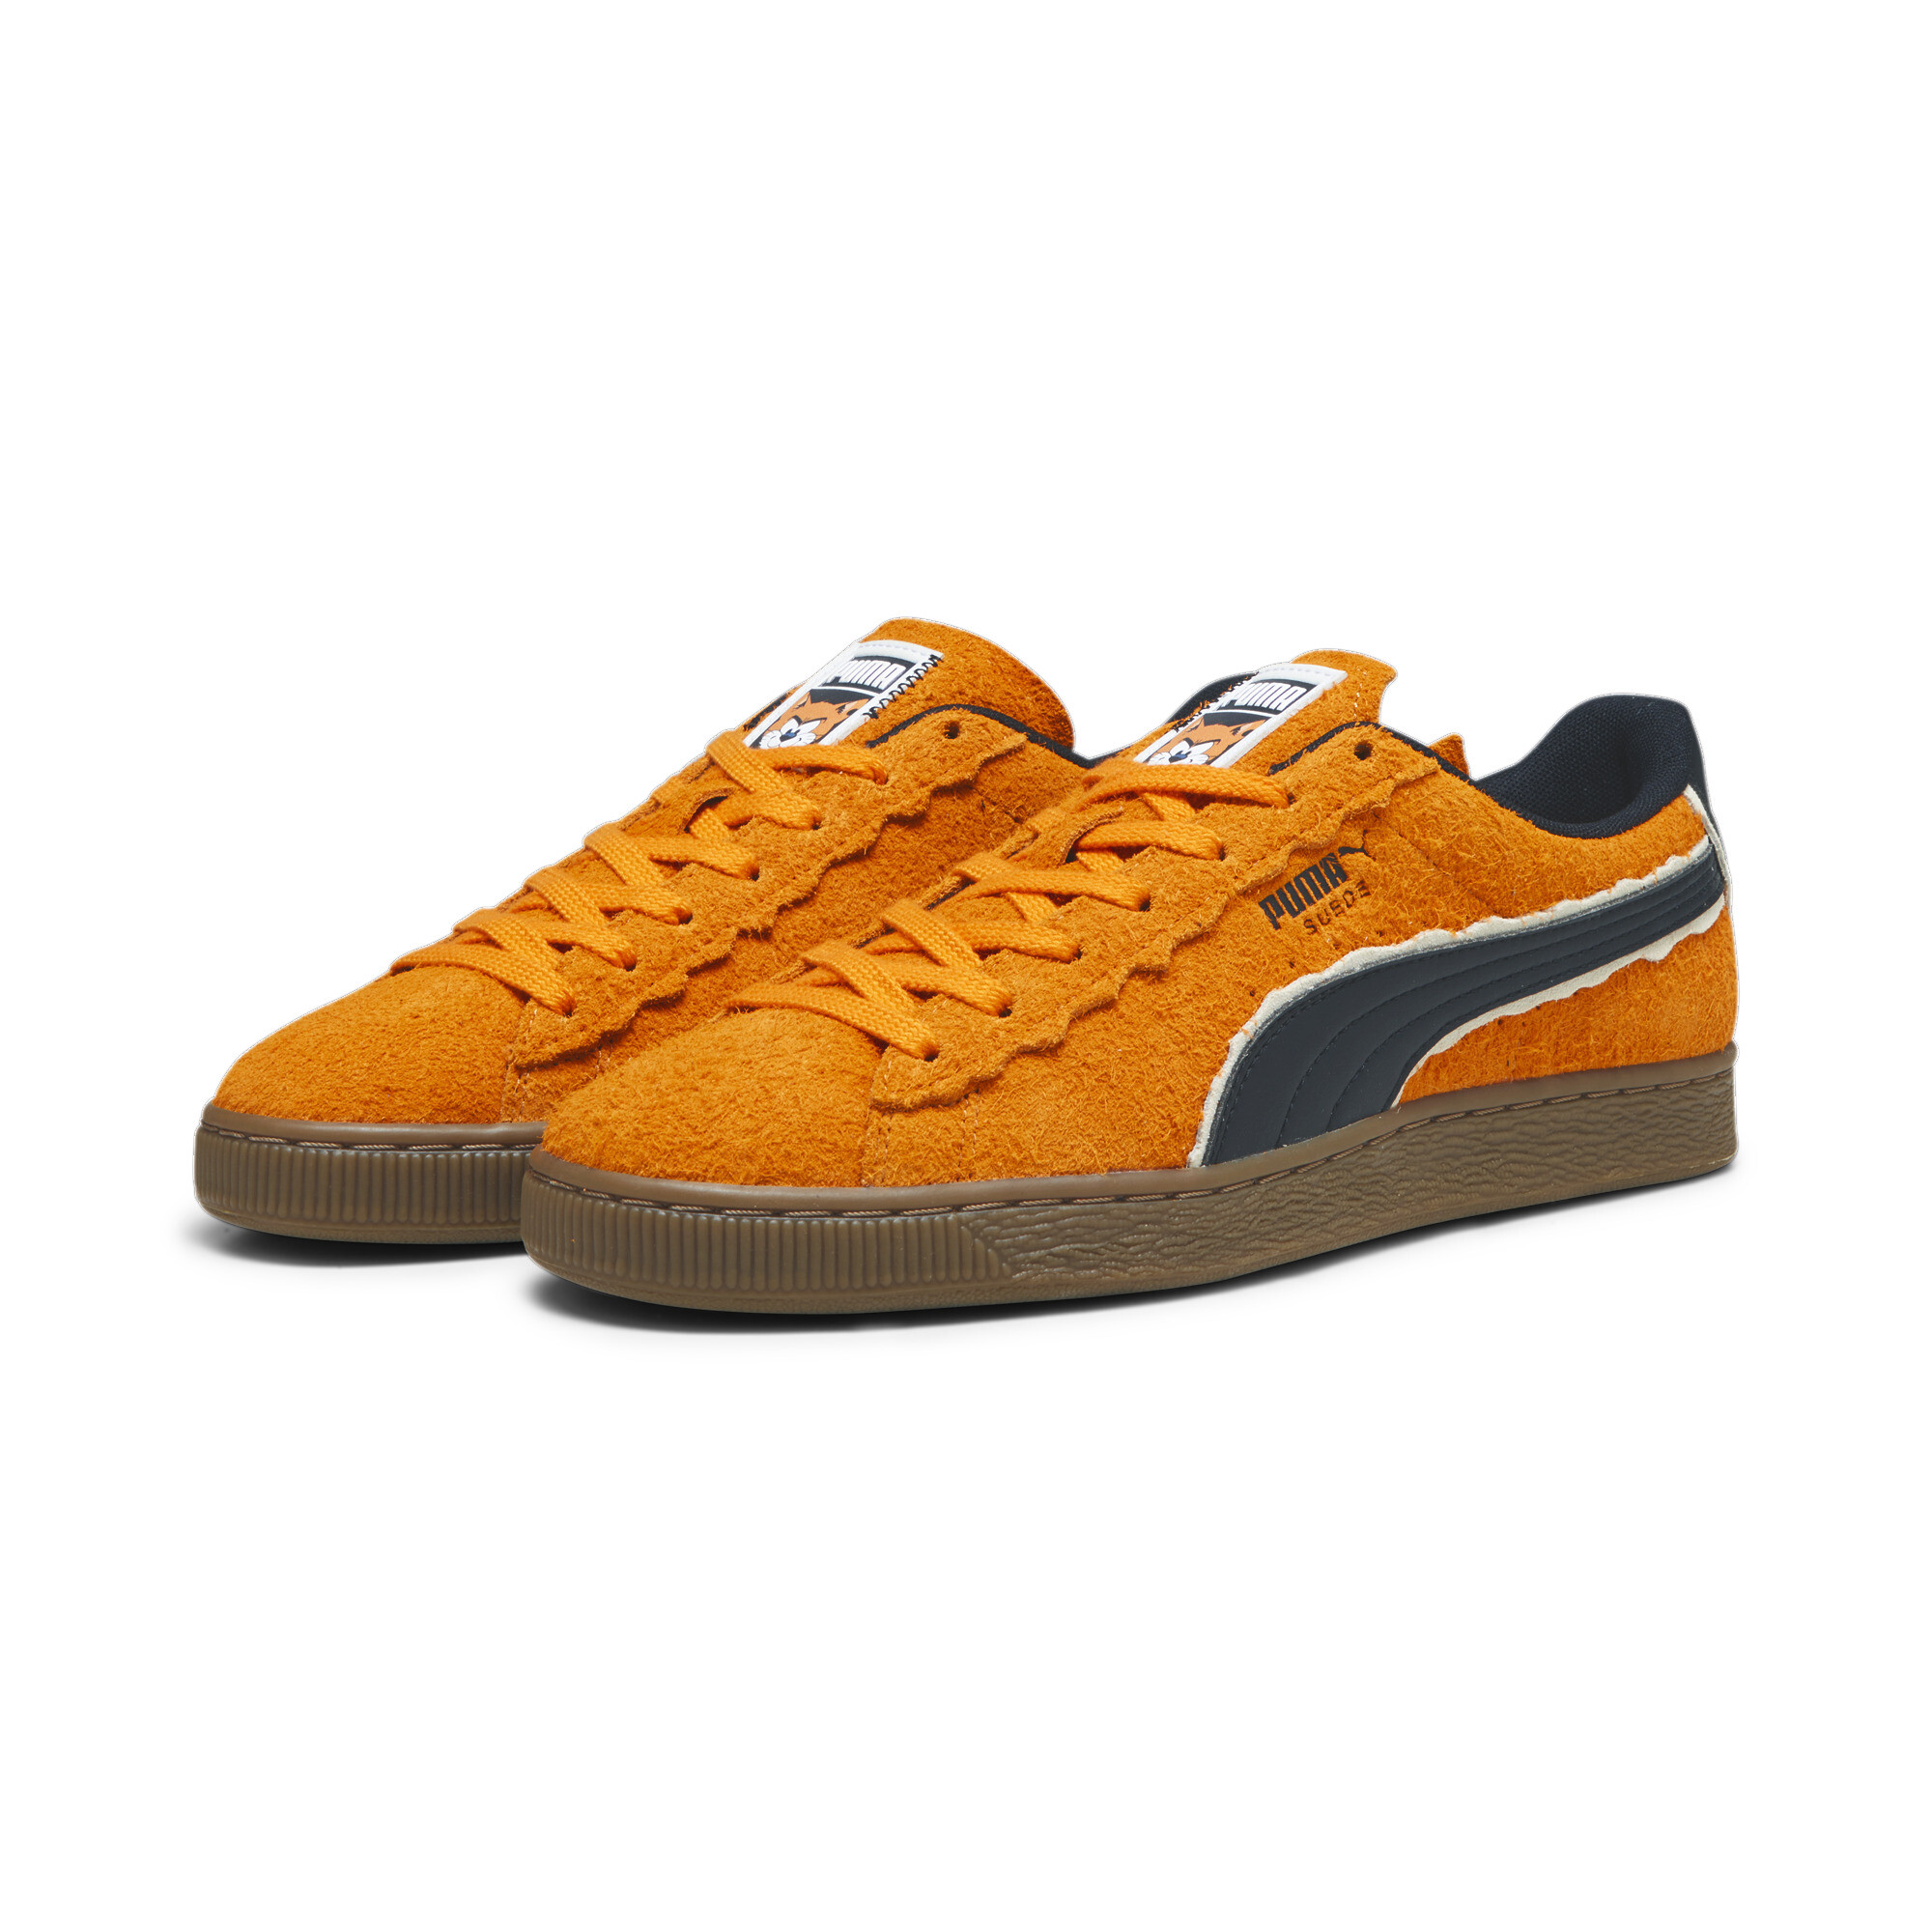 Men's PUMA X THE SMURFS Suede Sneakers In Orange, Size EU 42.5